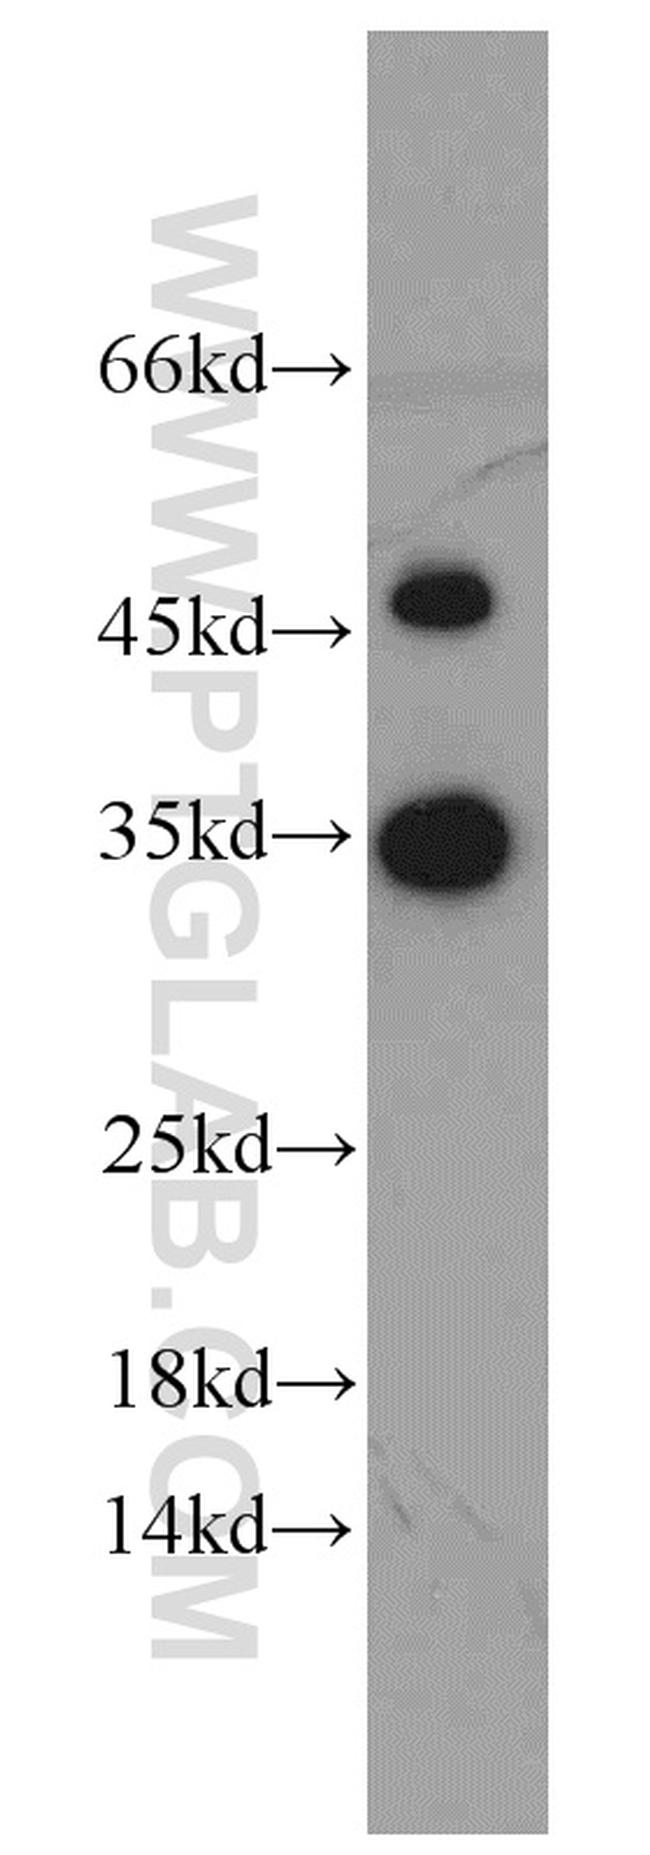 EEF1B2 Antibody in Western Blot (WB)